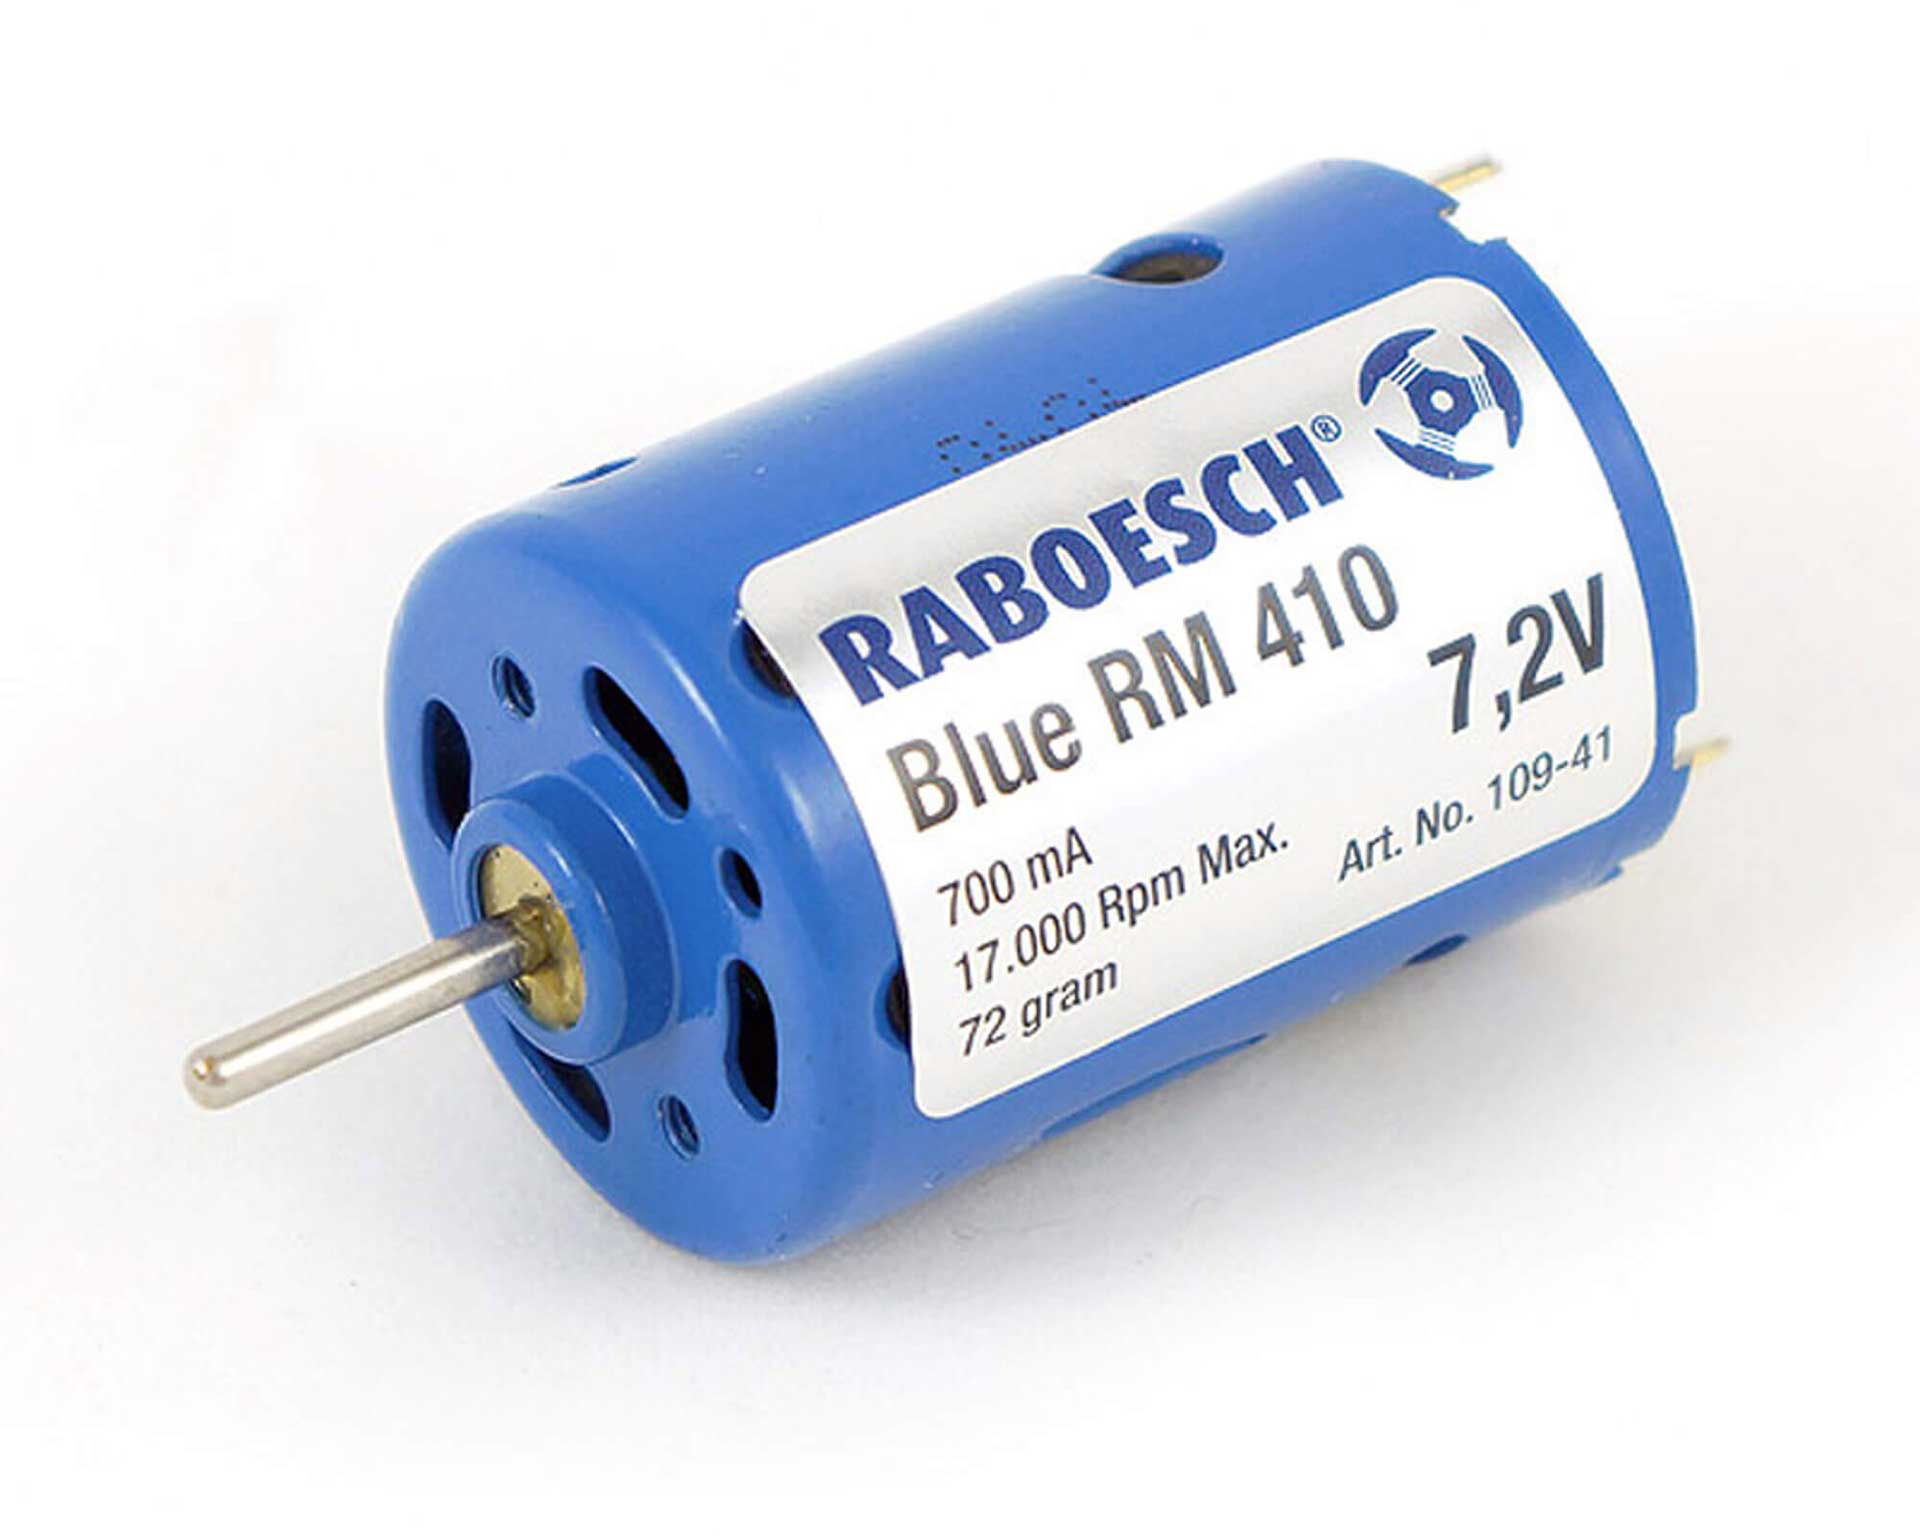 RABOESCH Electric motor Blue RM-410 7,2V